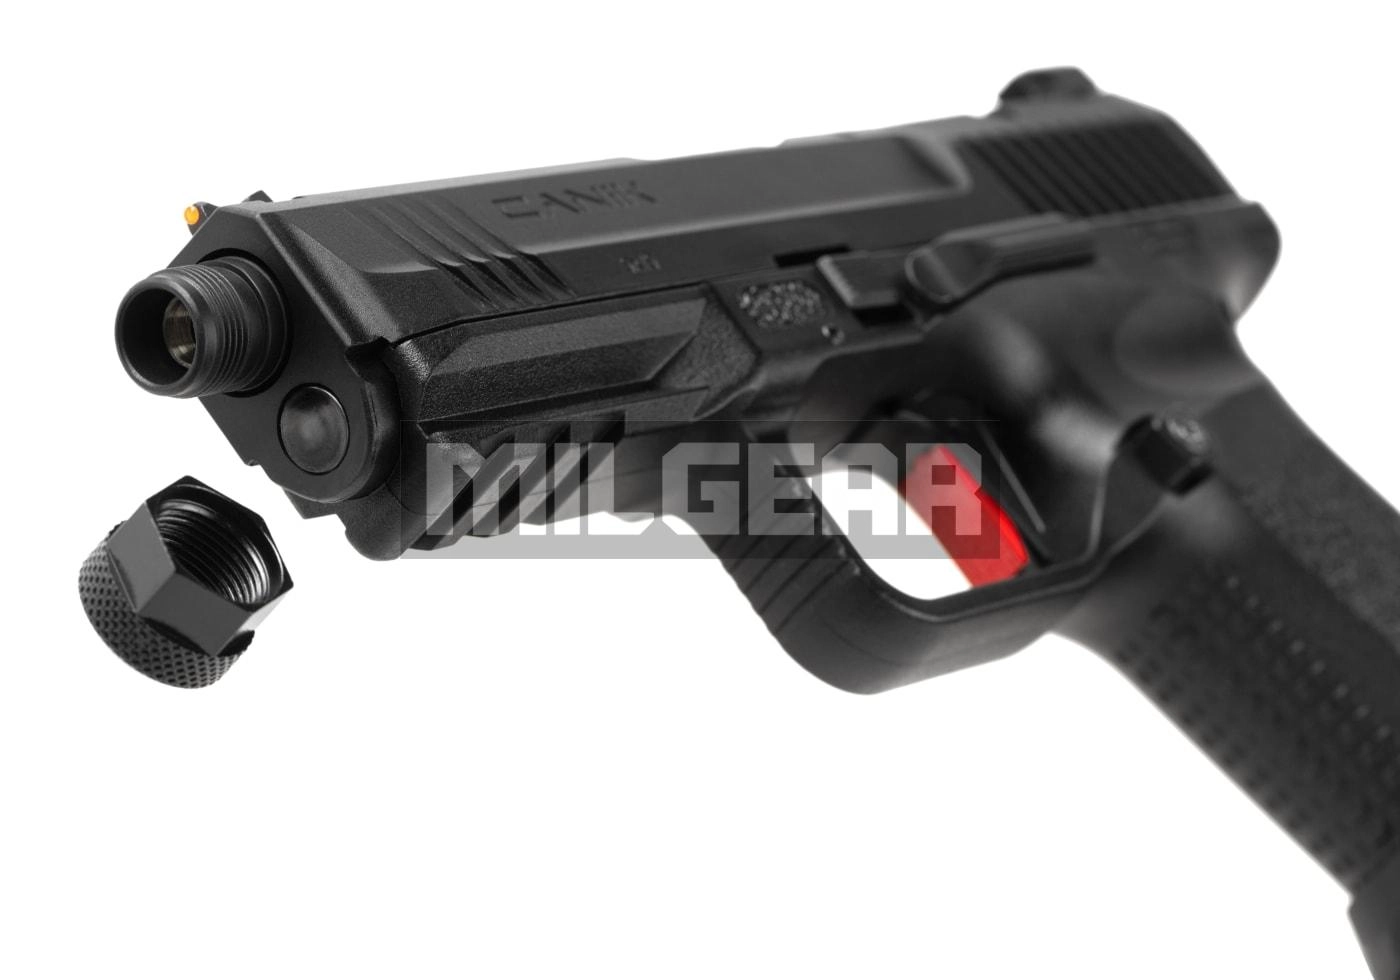 Cybergun Canik TP9 Elite GBB pistooli - musta